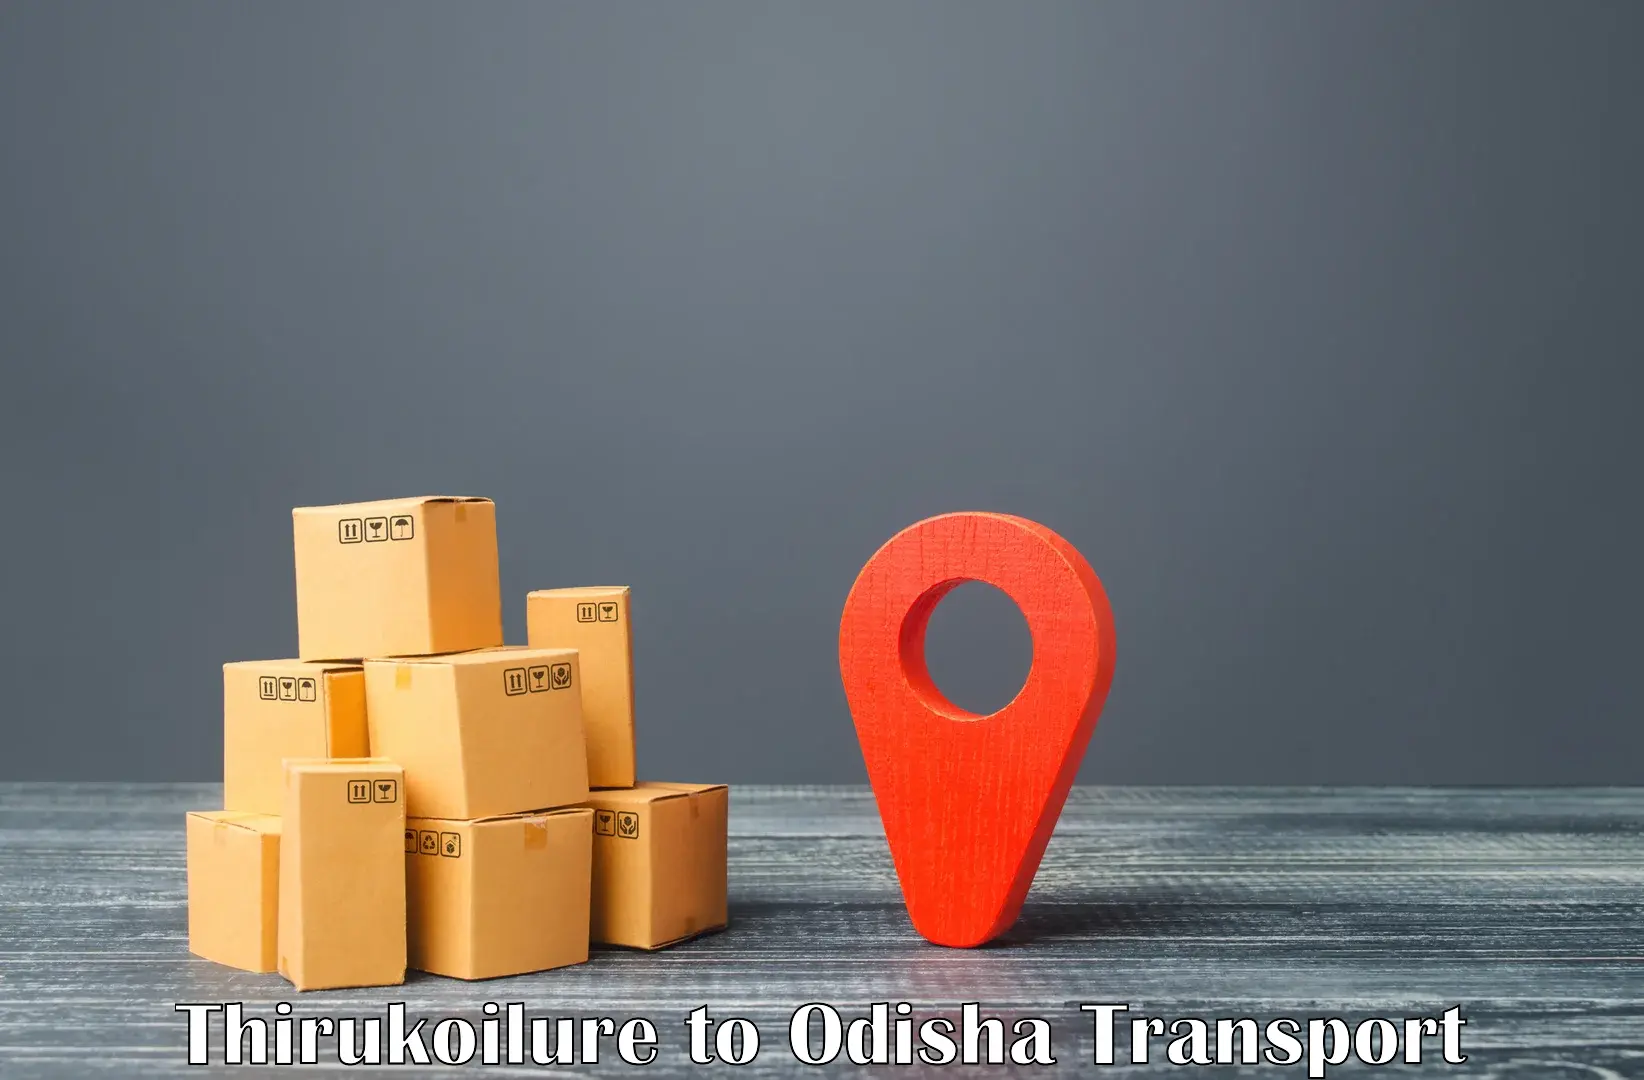 Container transport service Thirukoilure to Bhuban